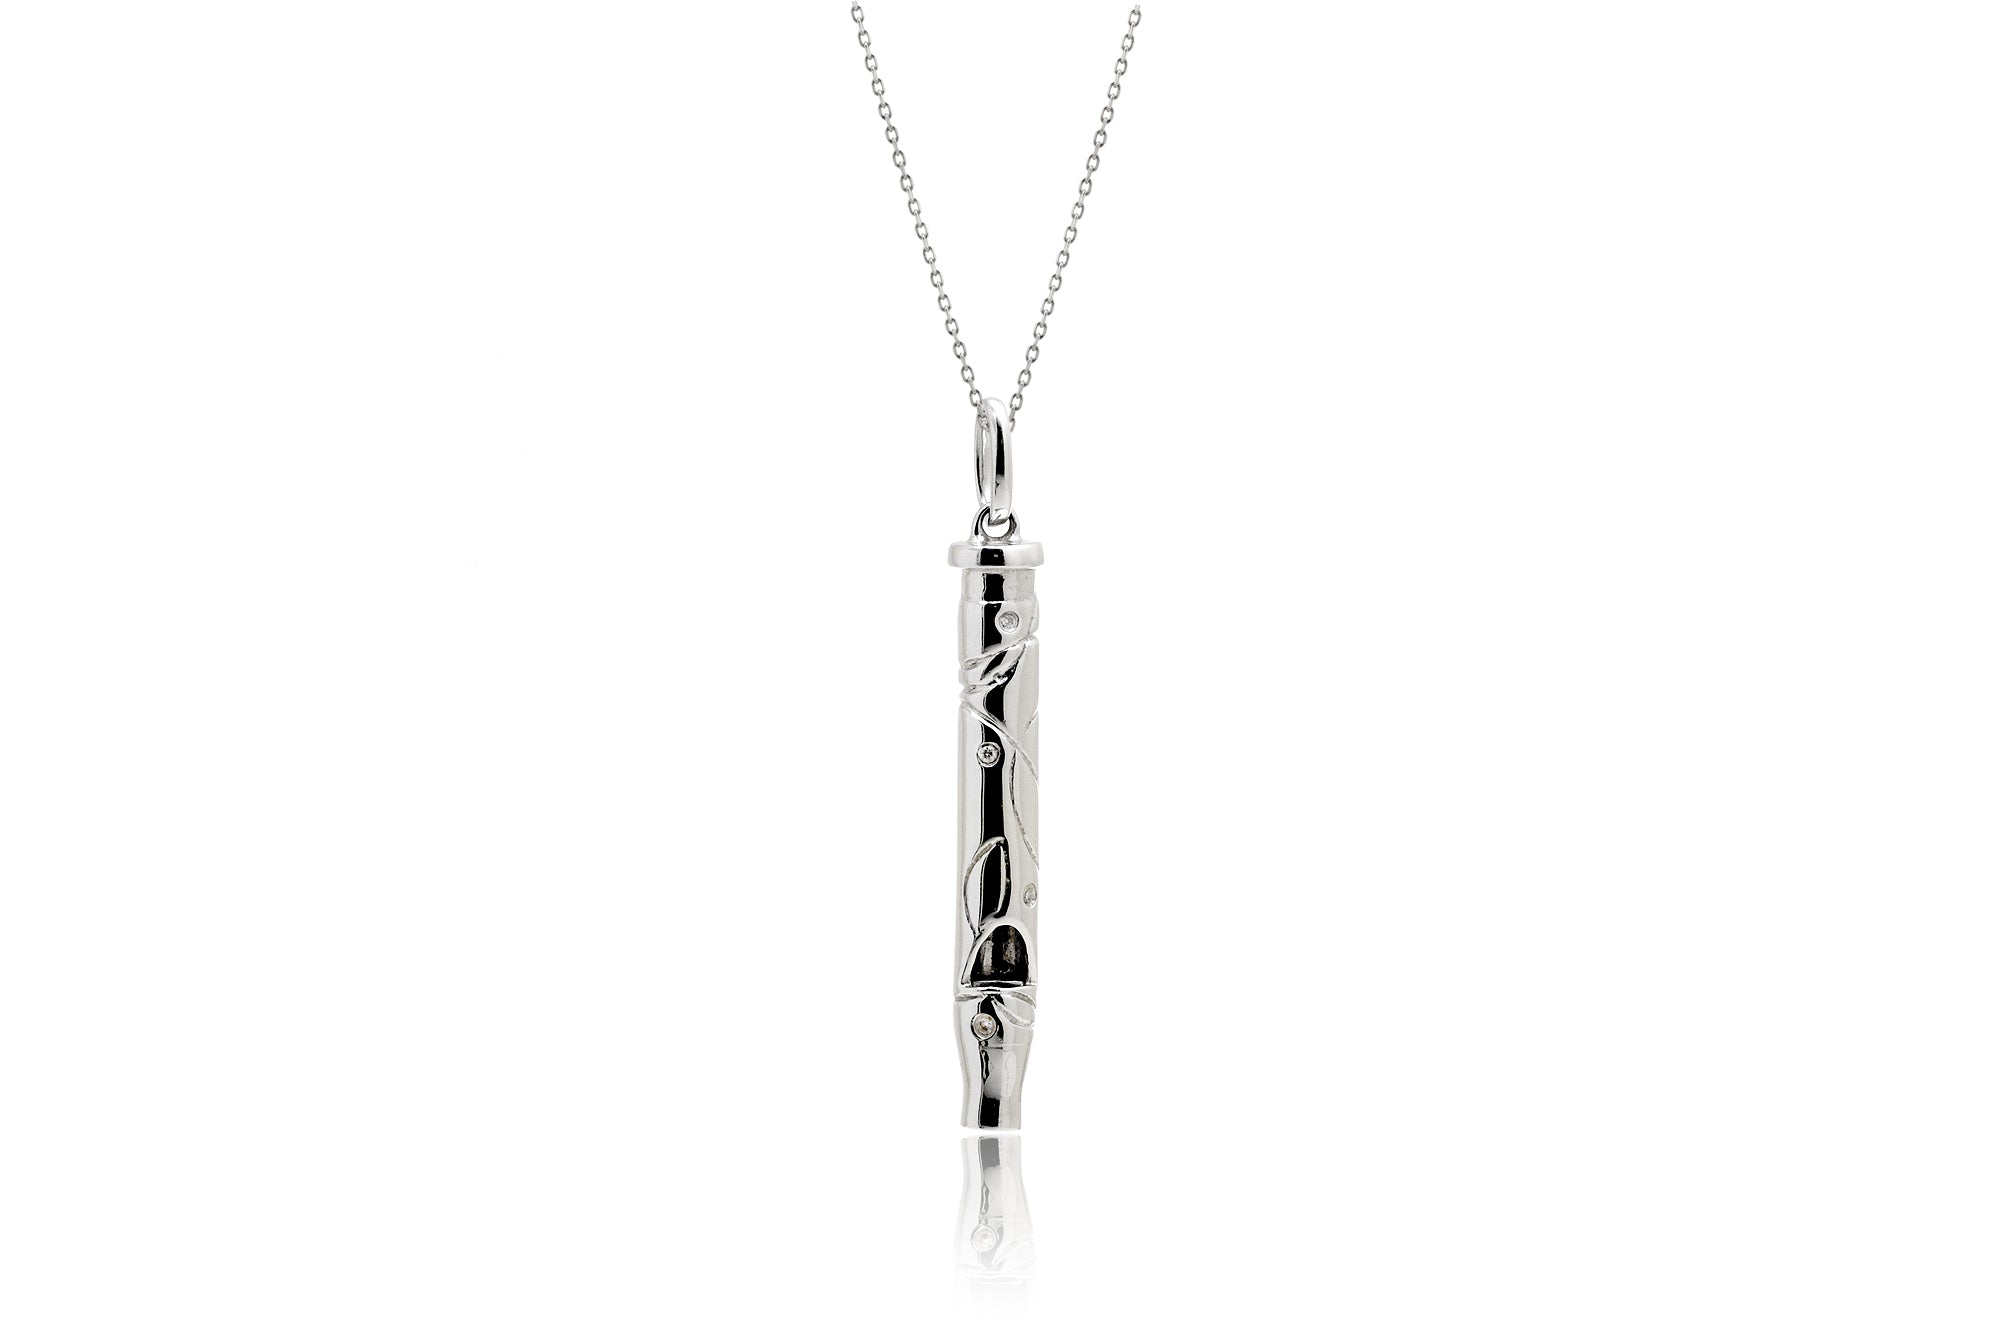 The Whistle/Flute Diamond Pendant